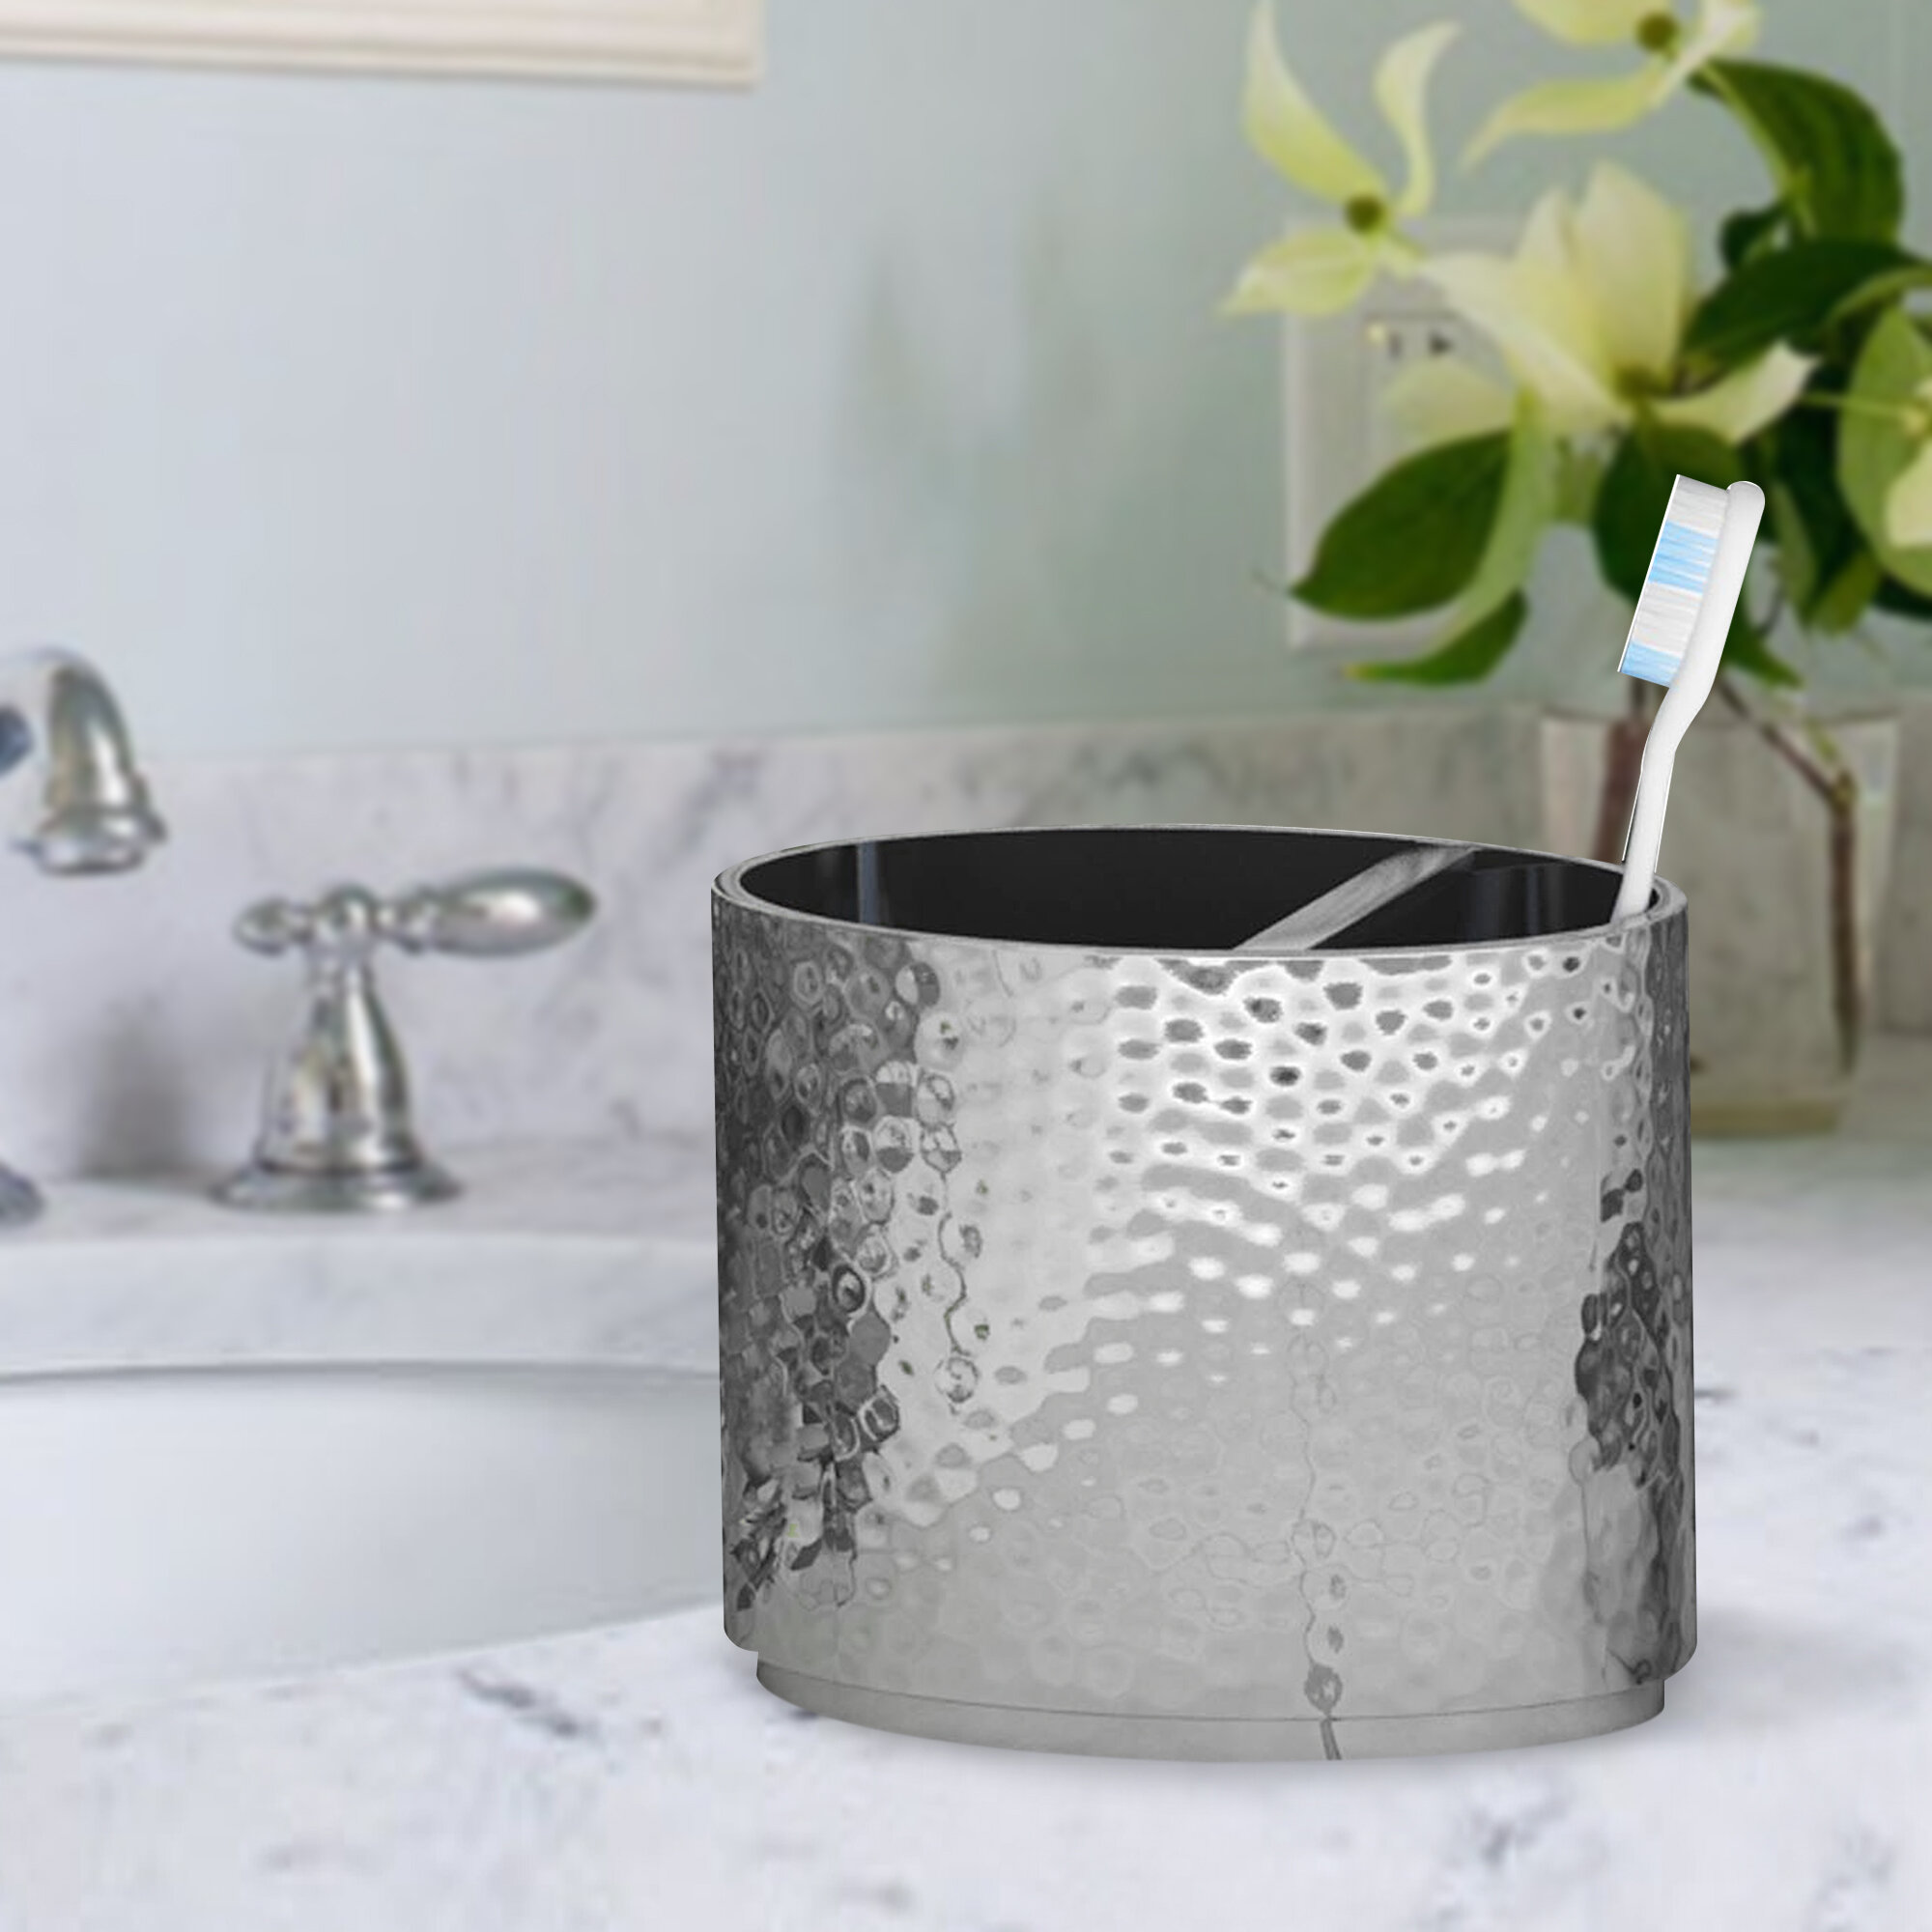 Hammered Effect Stainless Steel Bathroom Essentials Black Nickel Finish New